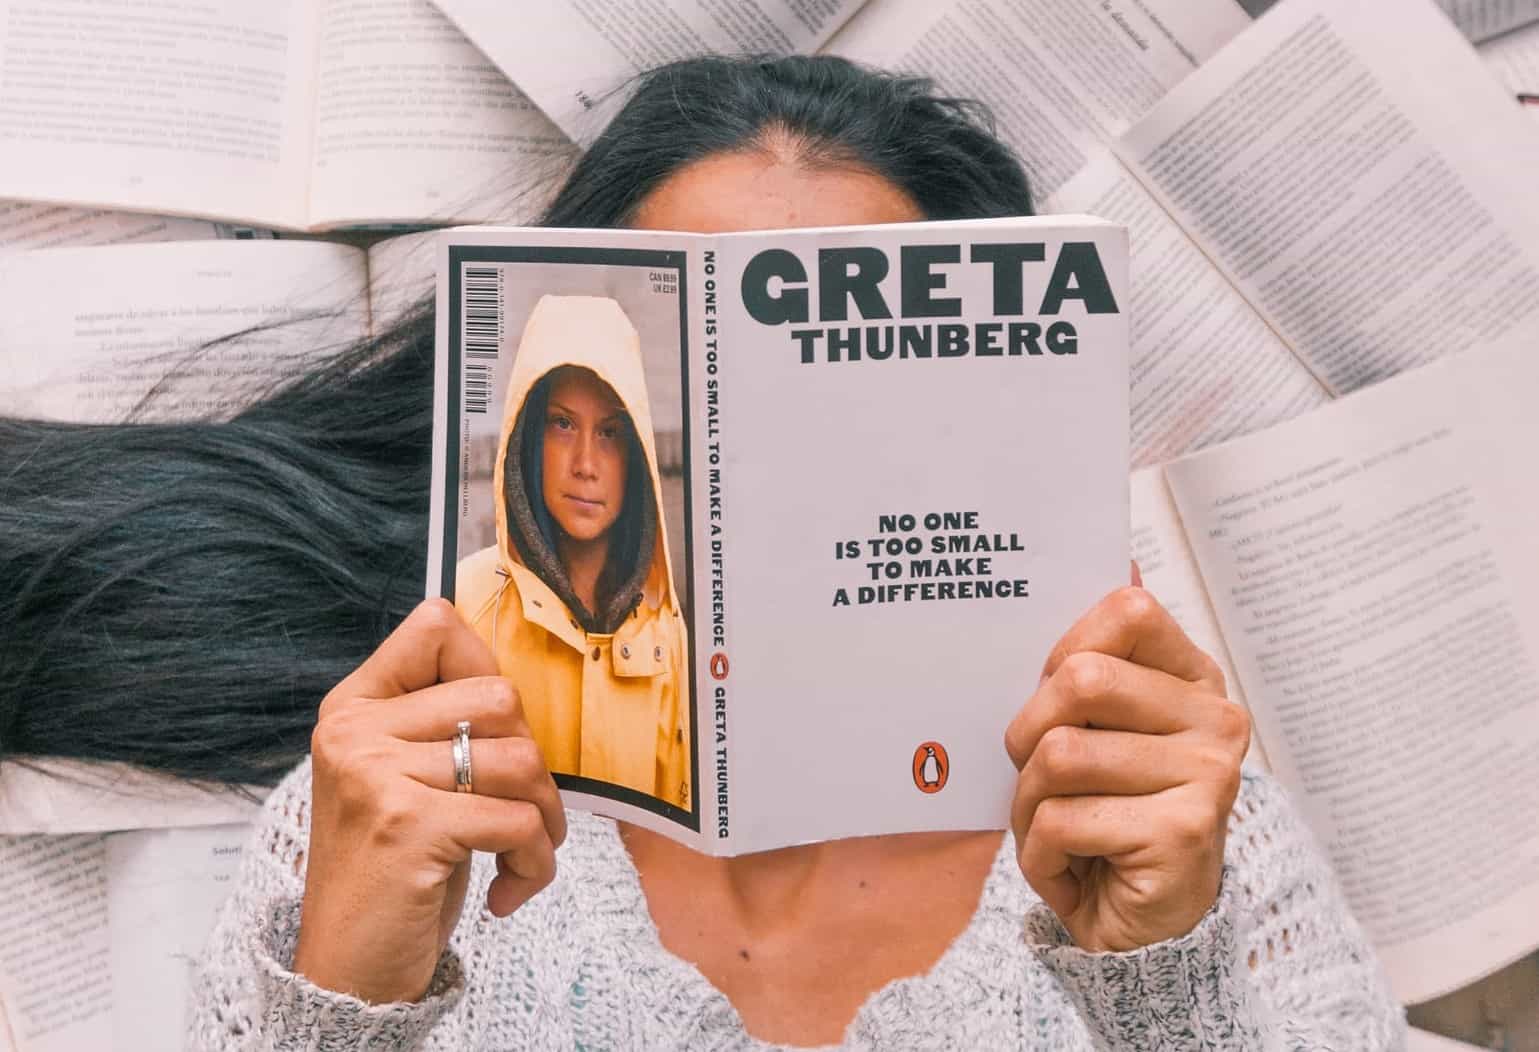 greta thunberg famous environmentalist short height